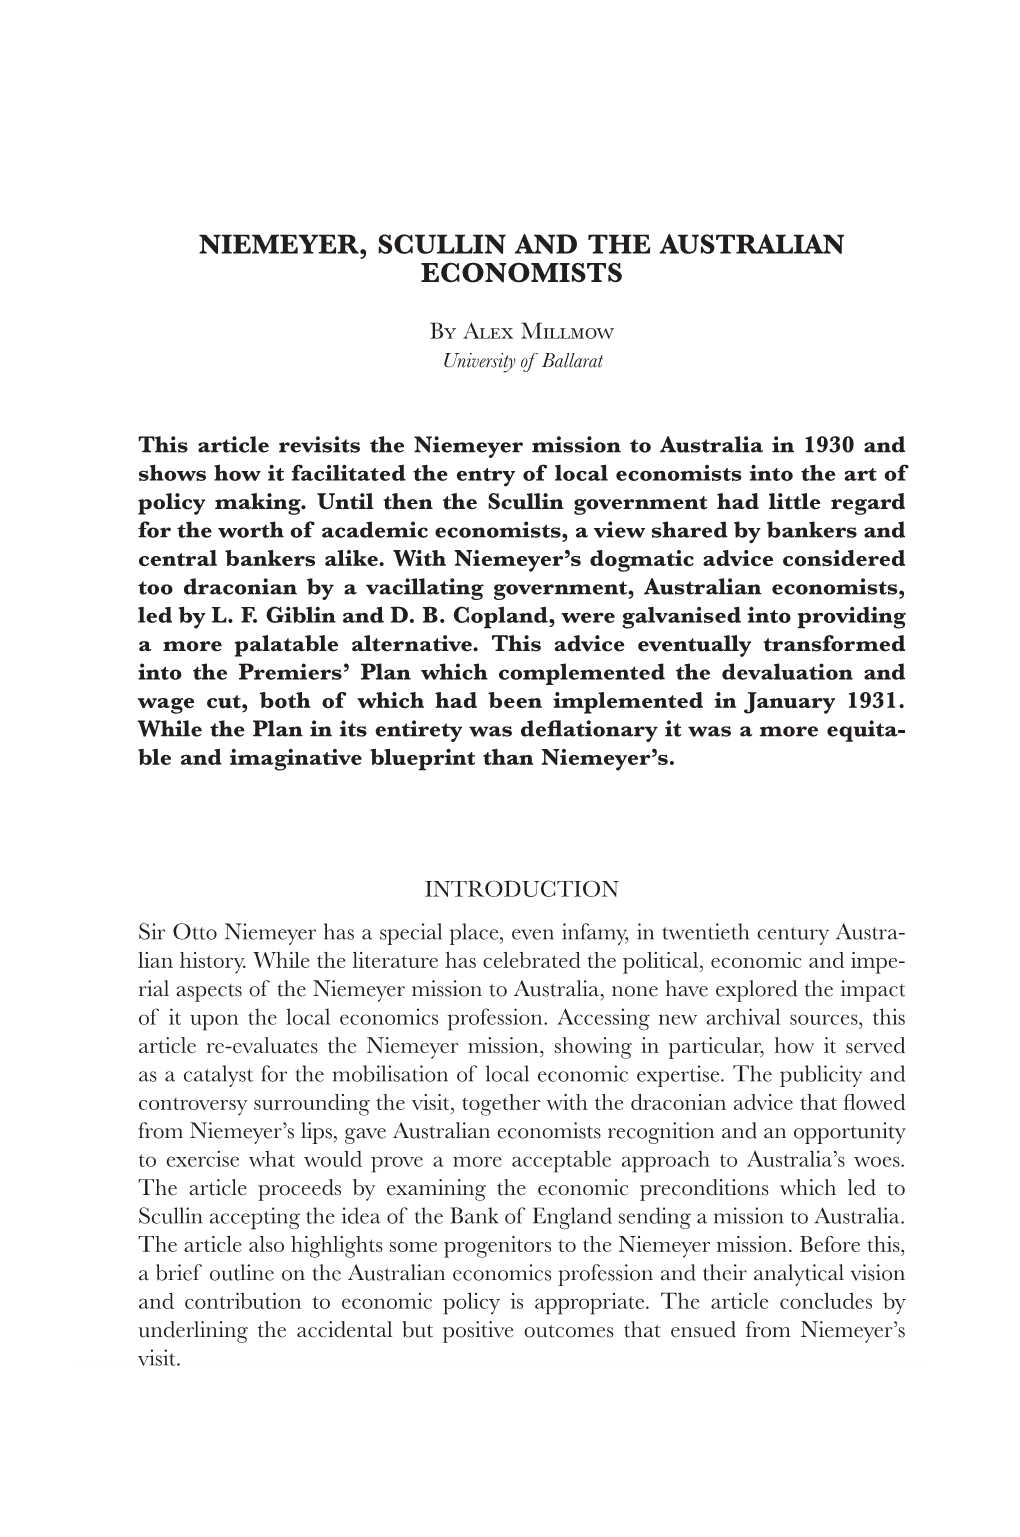 Niemeyer, Scullin and the Australian Economists